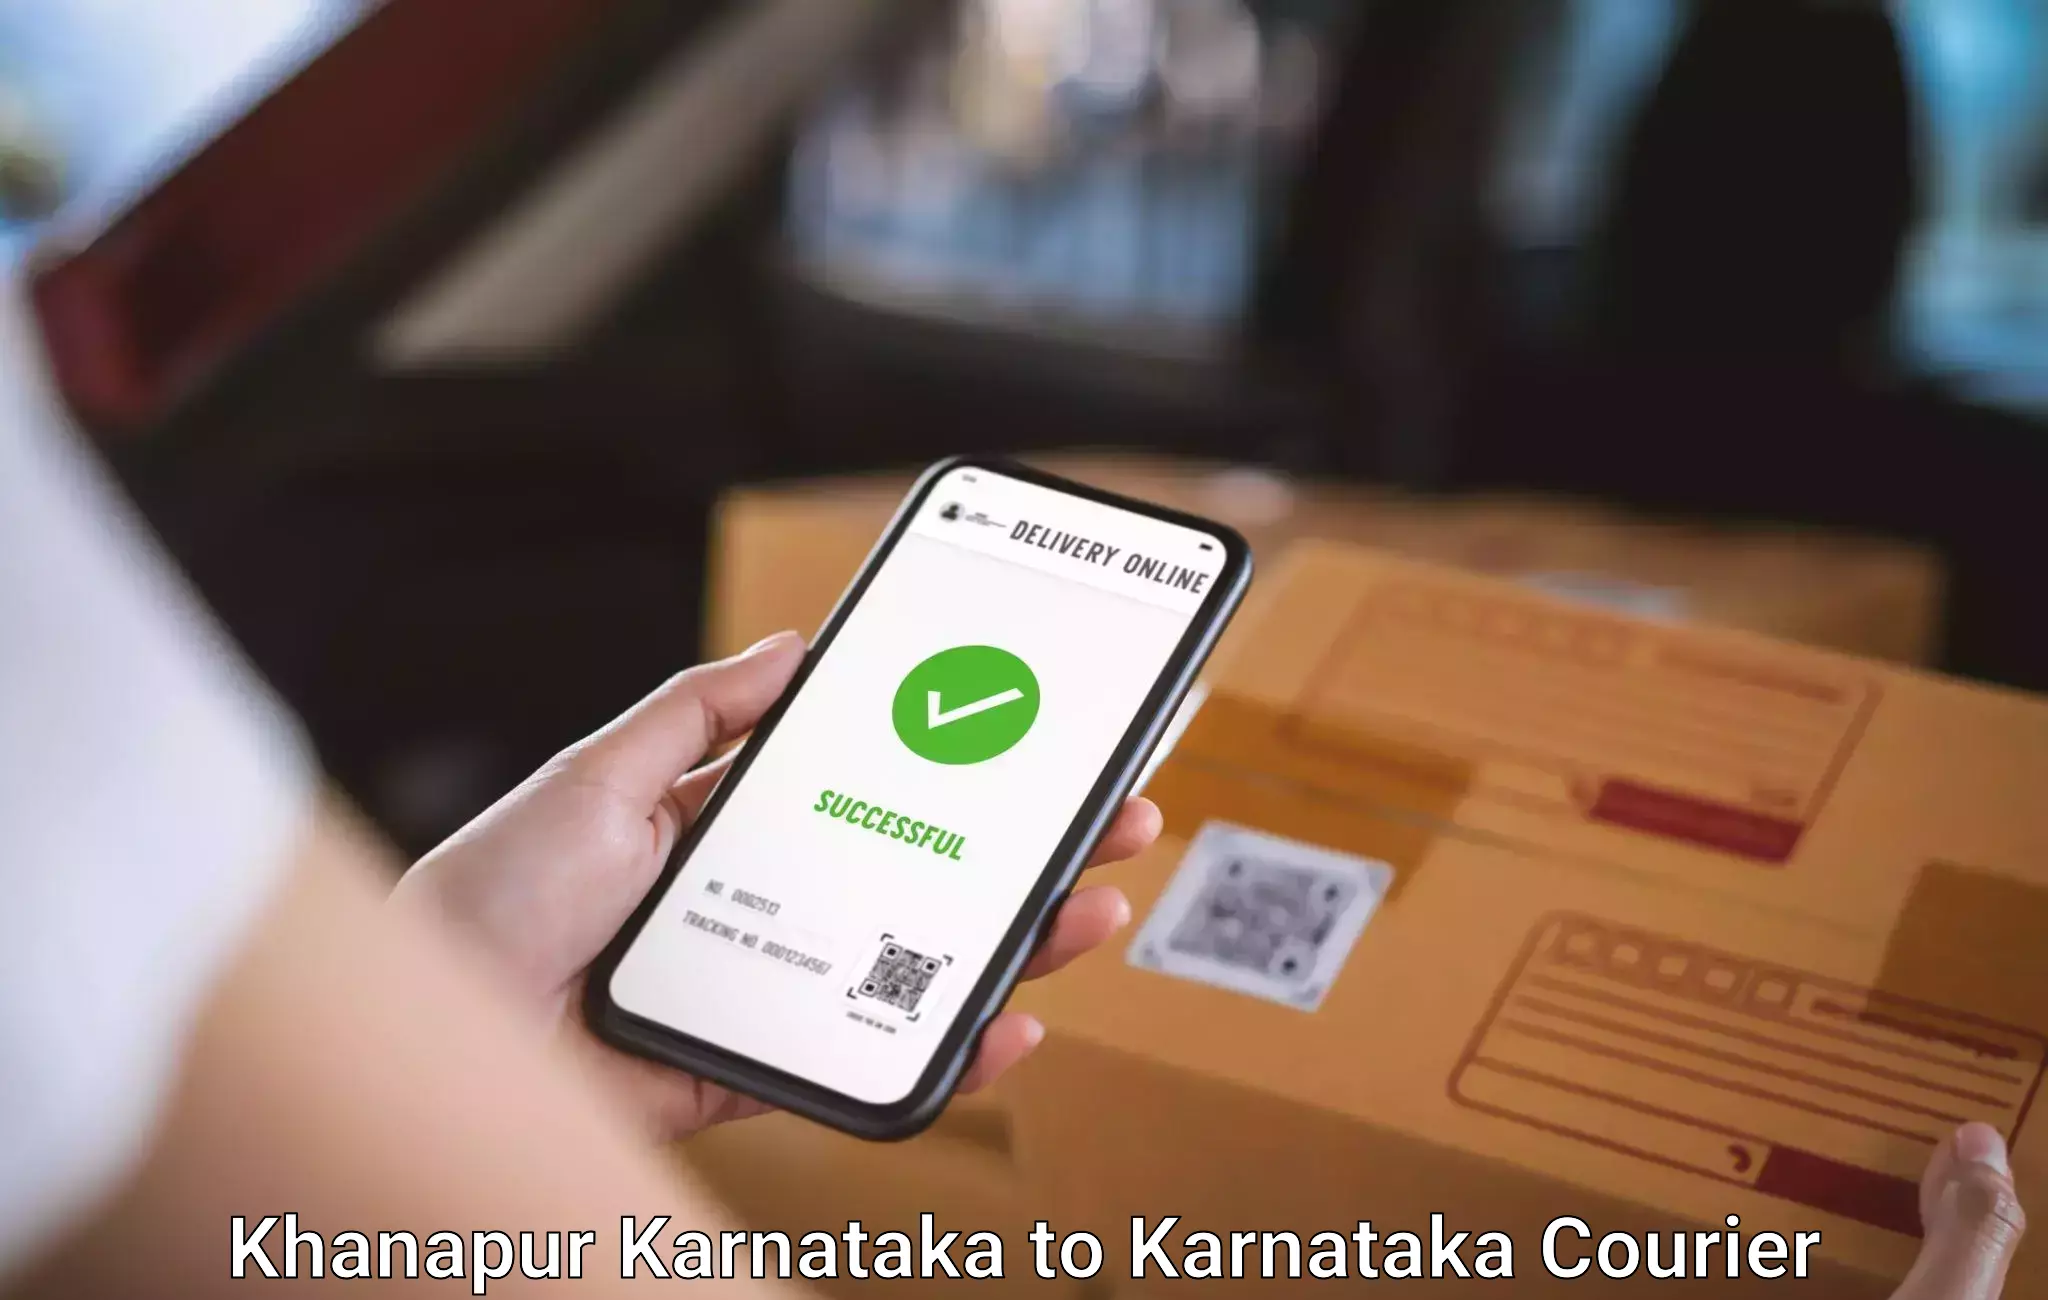 Baggage shipping service Khanapur Karnataka to Udupi